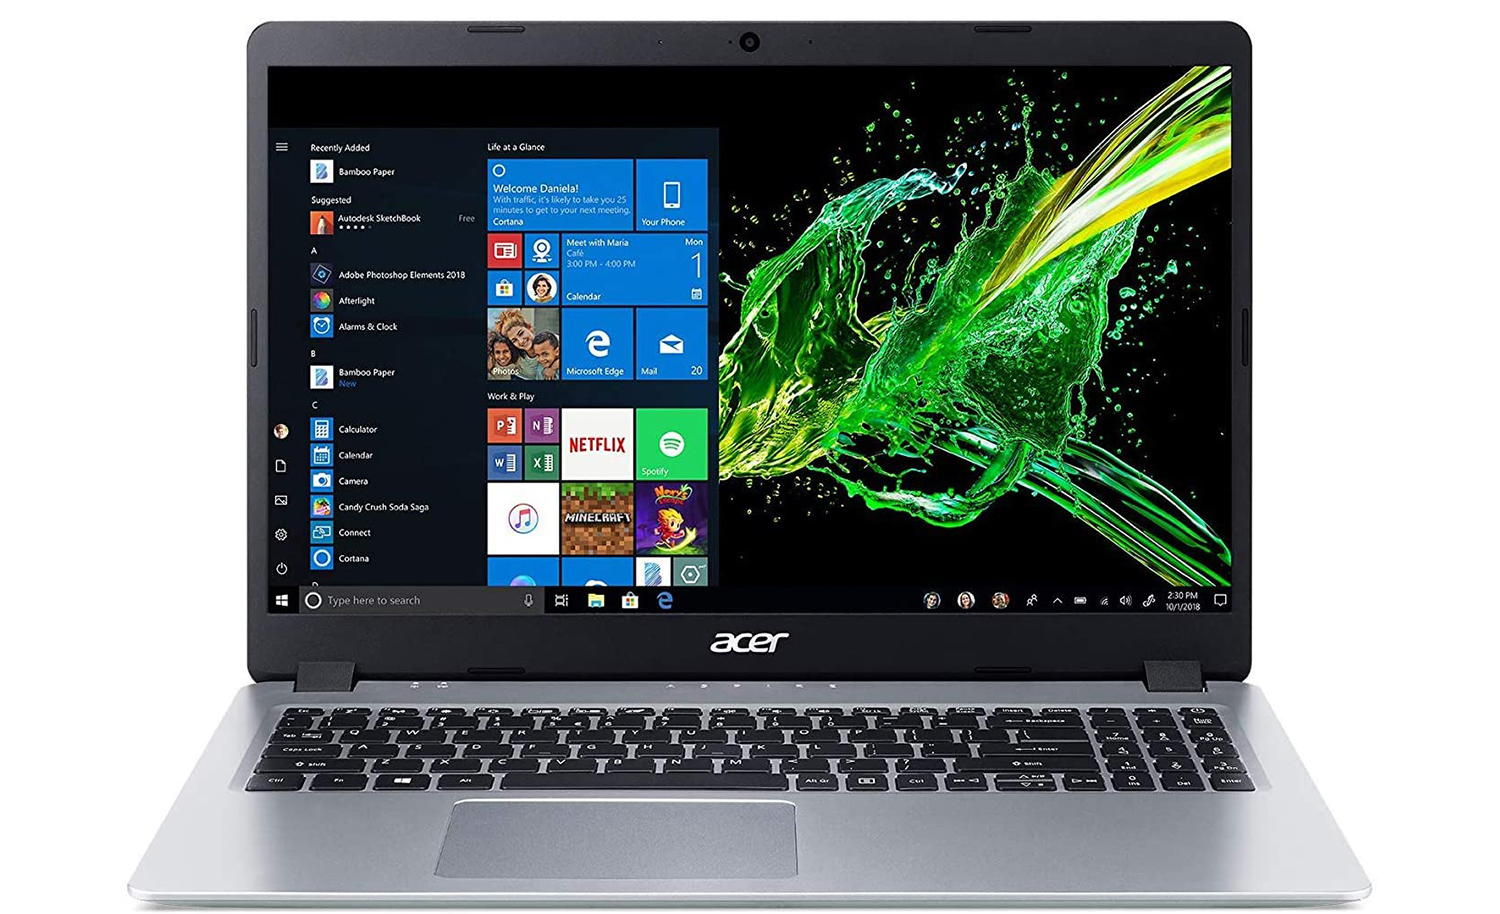 Acer Aspire A515 Intel Core i5 8th Gen 8GB RAM 256GB SSD Windows 10 Home